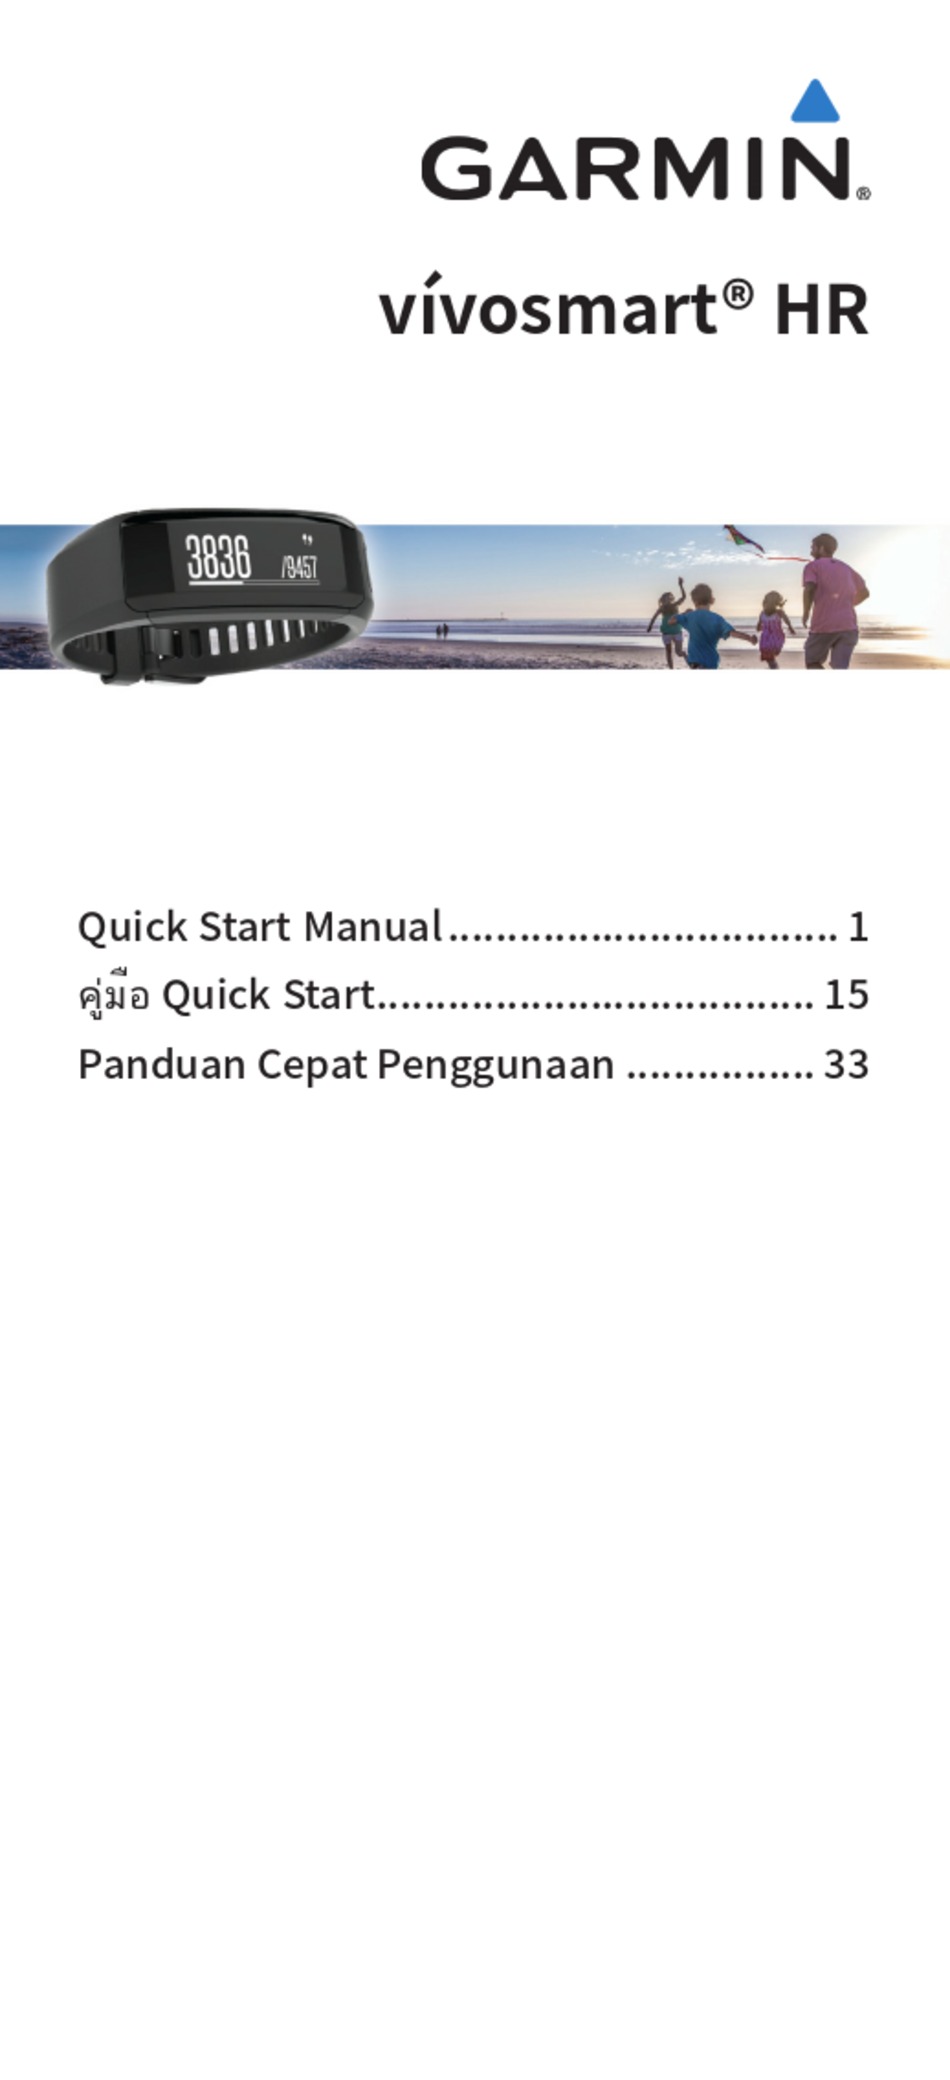 garmin basecamp manual pdf download